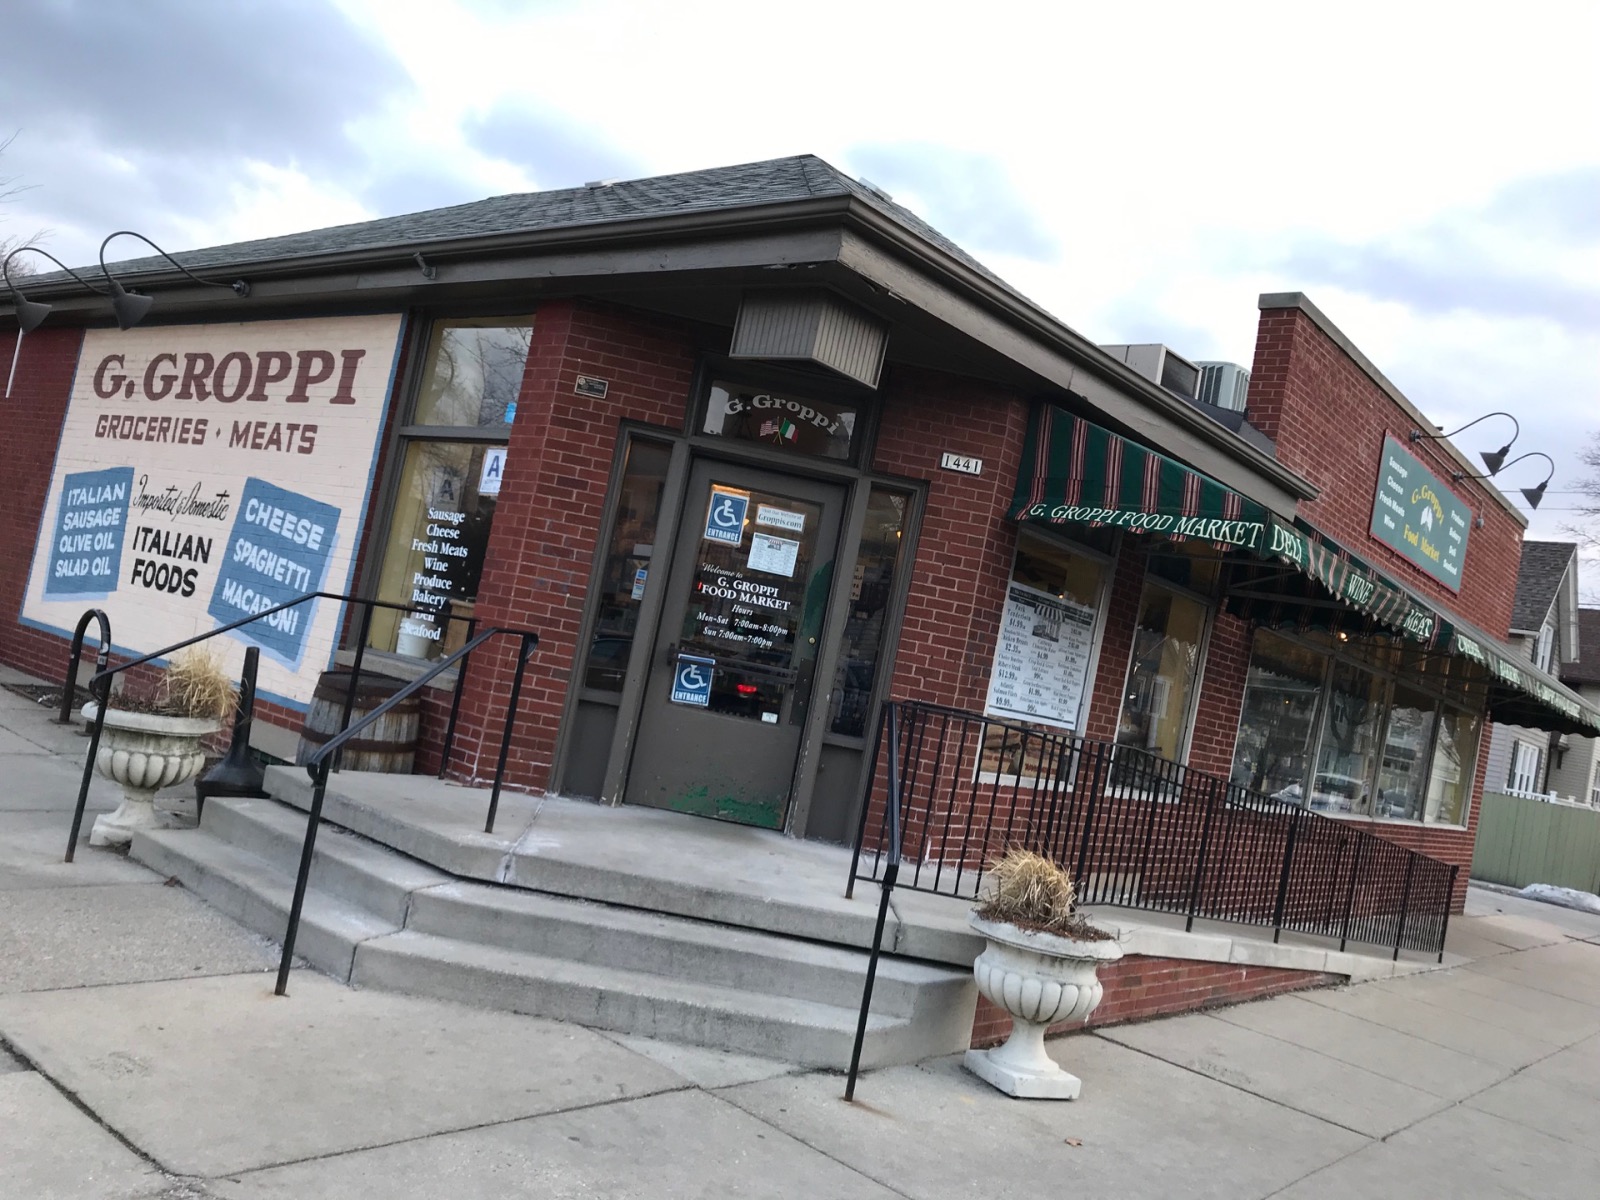 Hidden gem: Louie's Coop inside G. Groppi Food Market